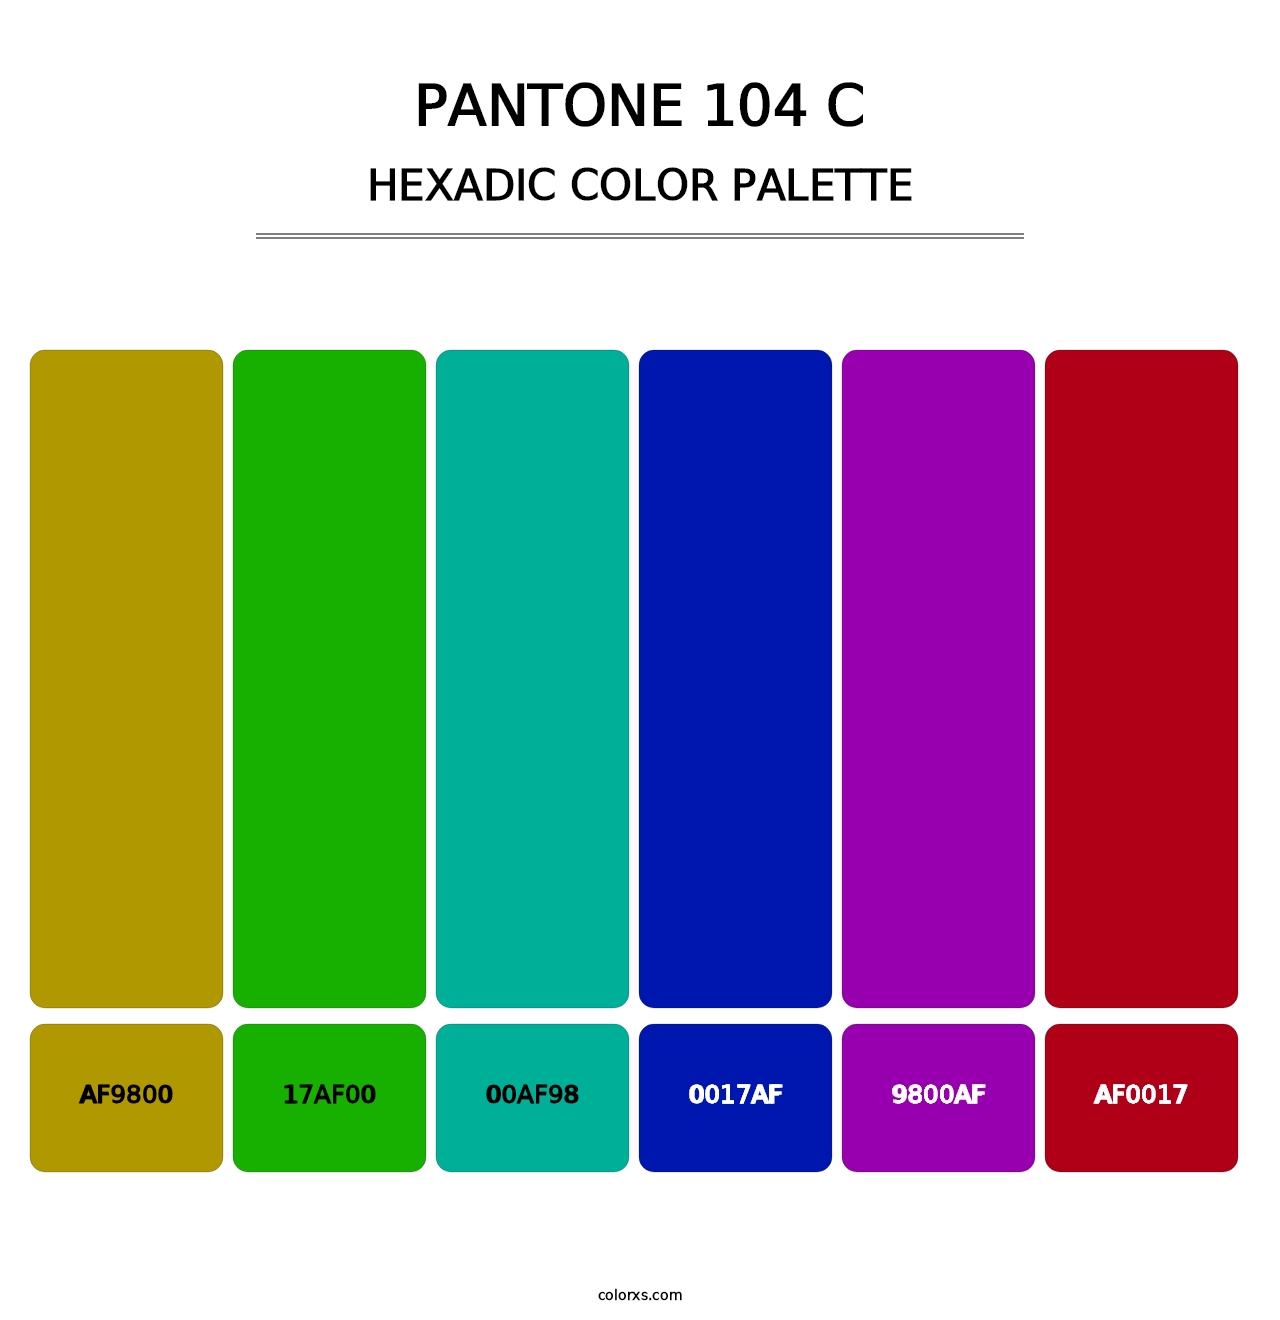 PANTONE 104 C - Hexadic Color Palette